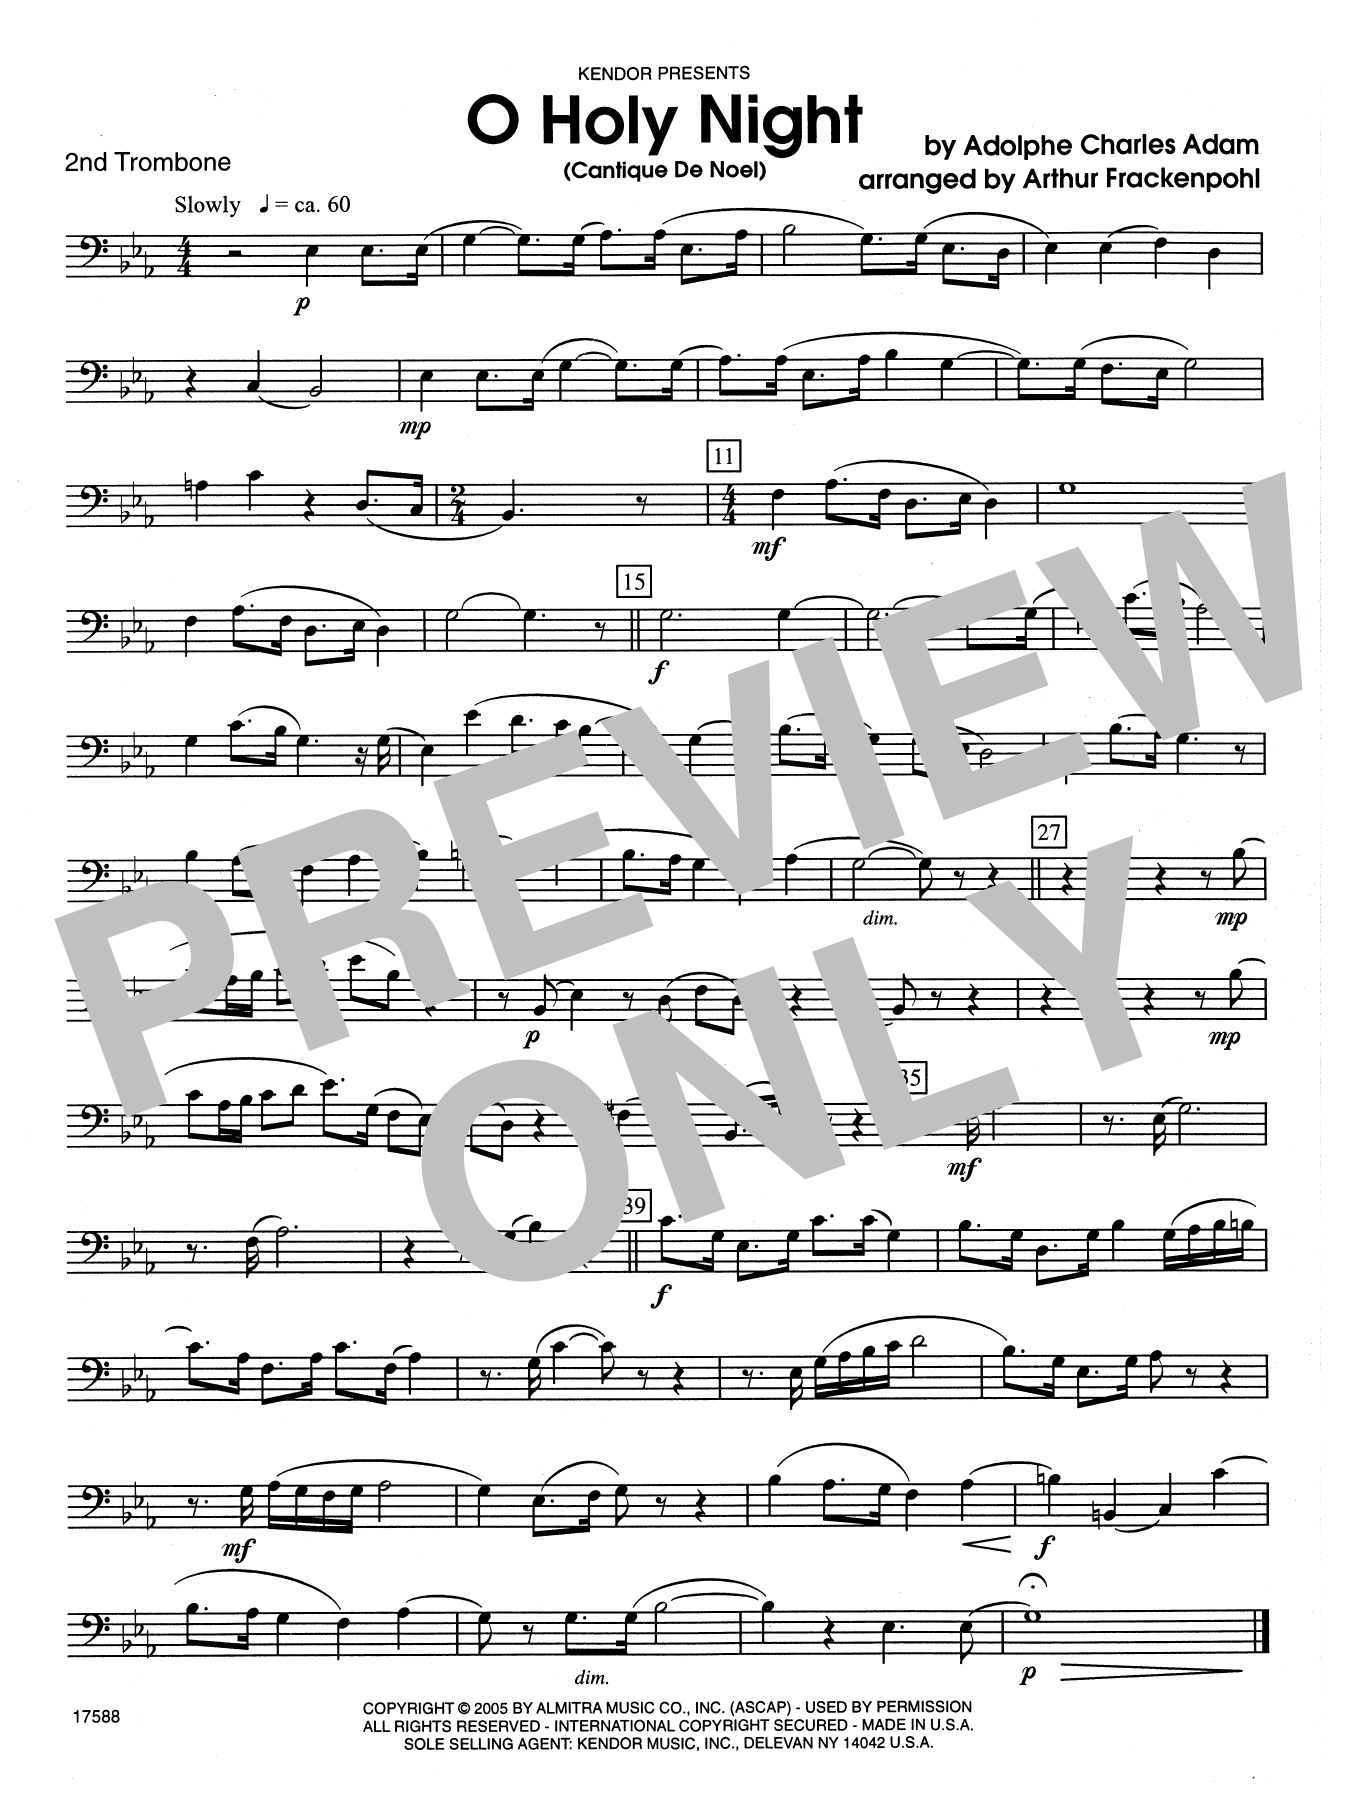 Download Arthur Frackenpohl O Holy Night (Cantique de Noel) - 2nd T Sheet Music